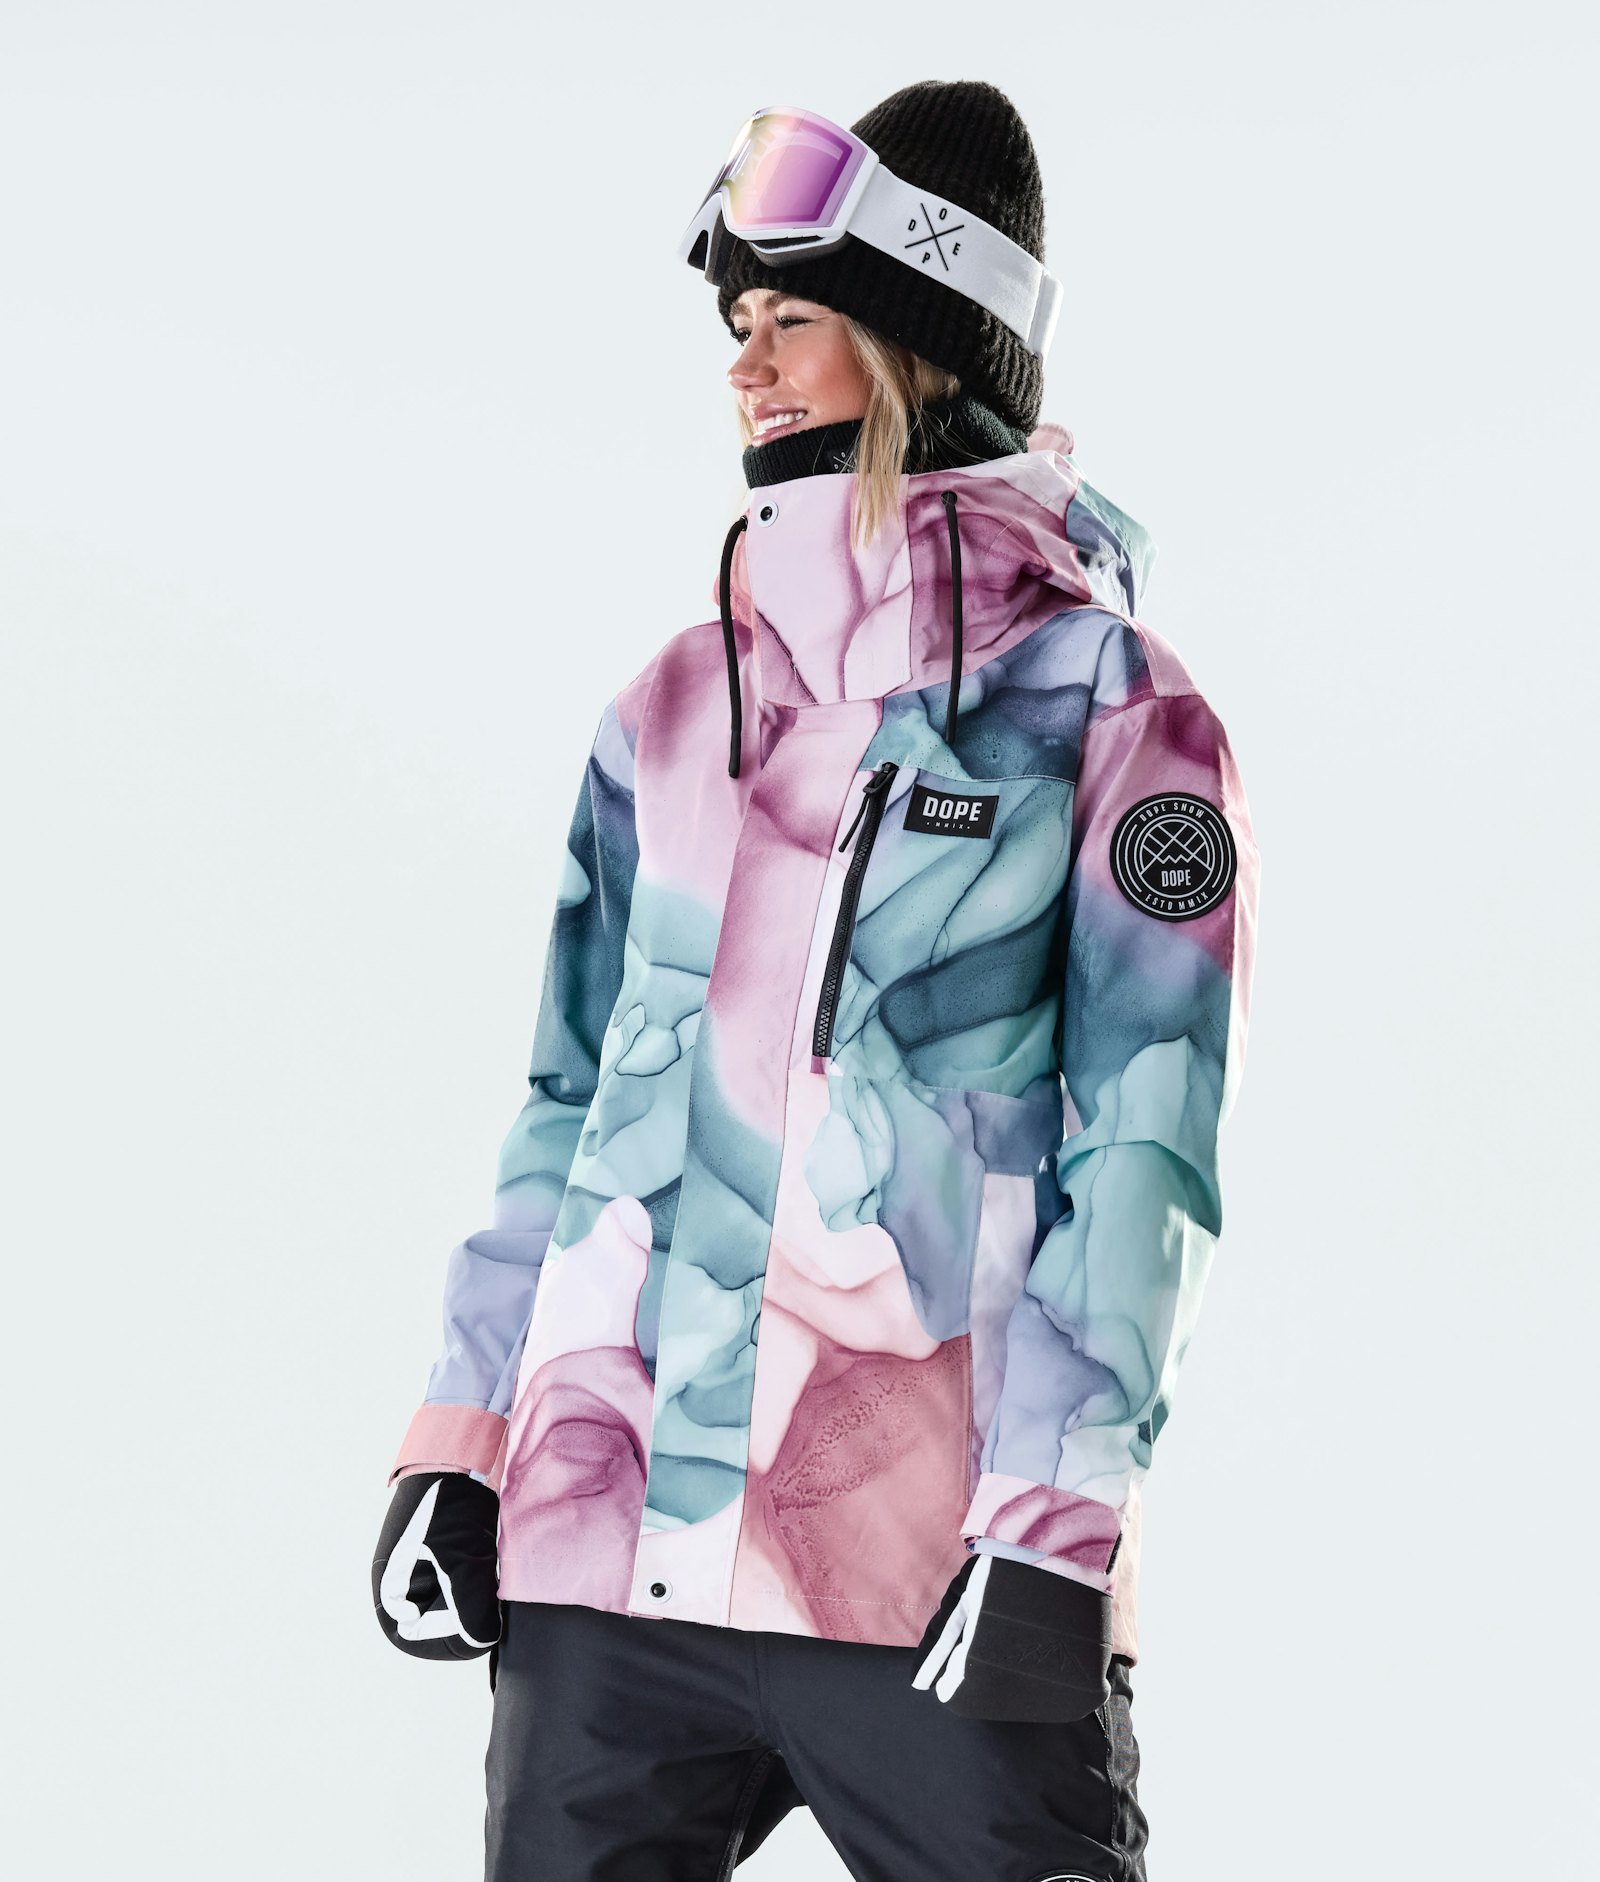 Blizzard W Full Zip 2020 Snowboard Jacket Women Mirage